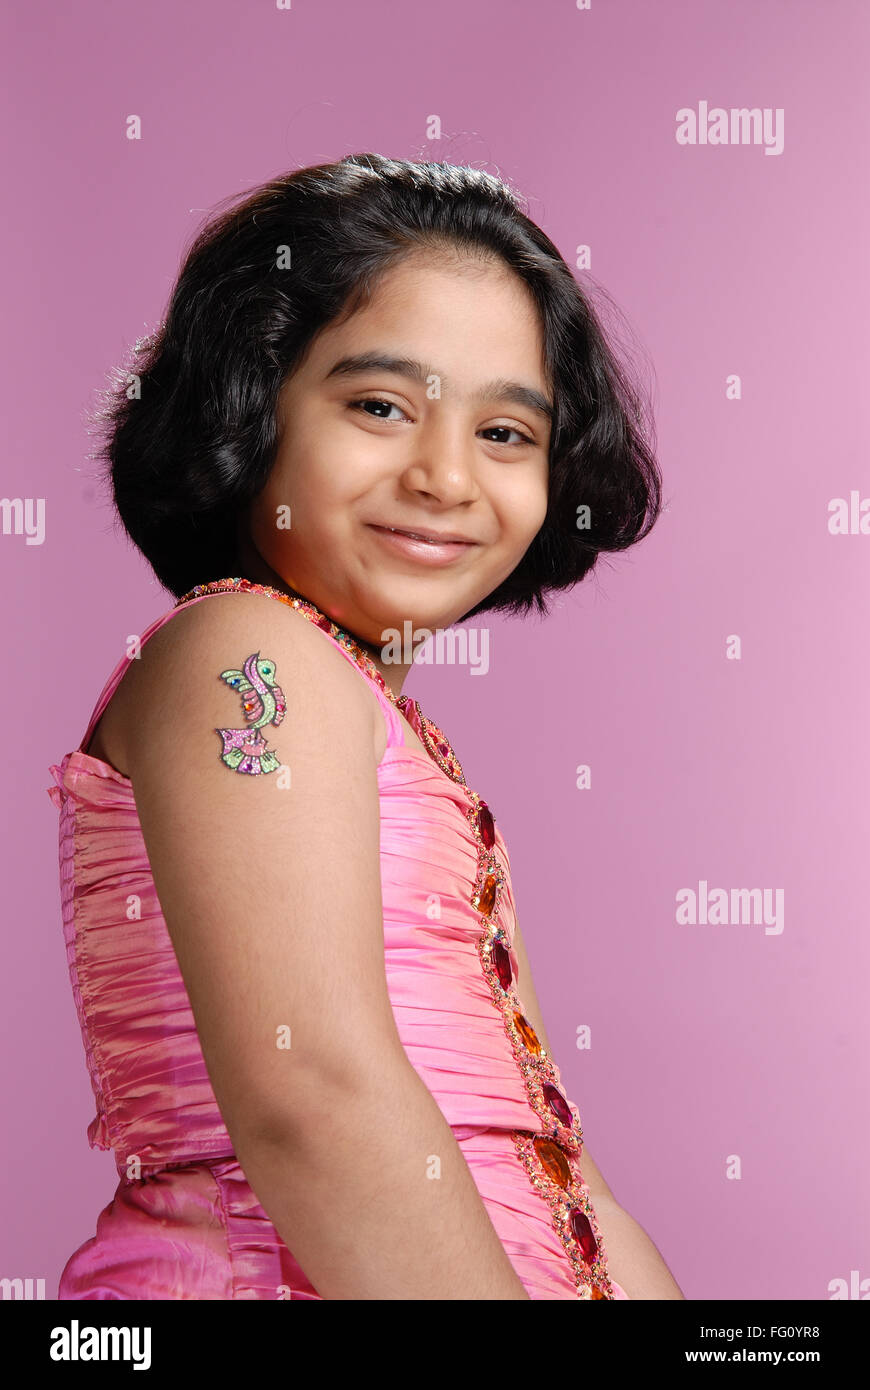 South Asian Indian ragazza sorridente signor# 719B Foto Stock